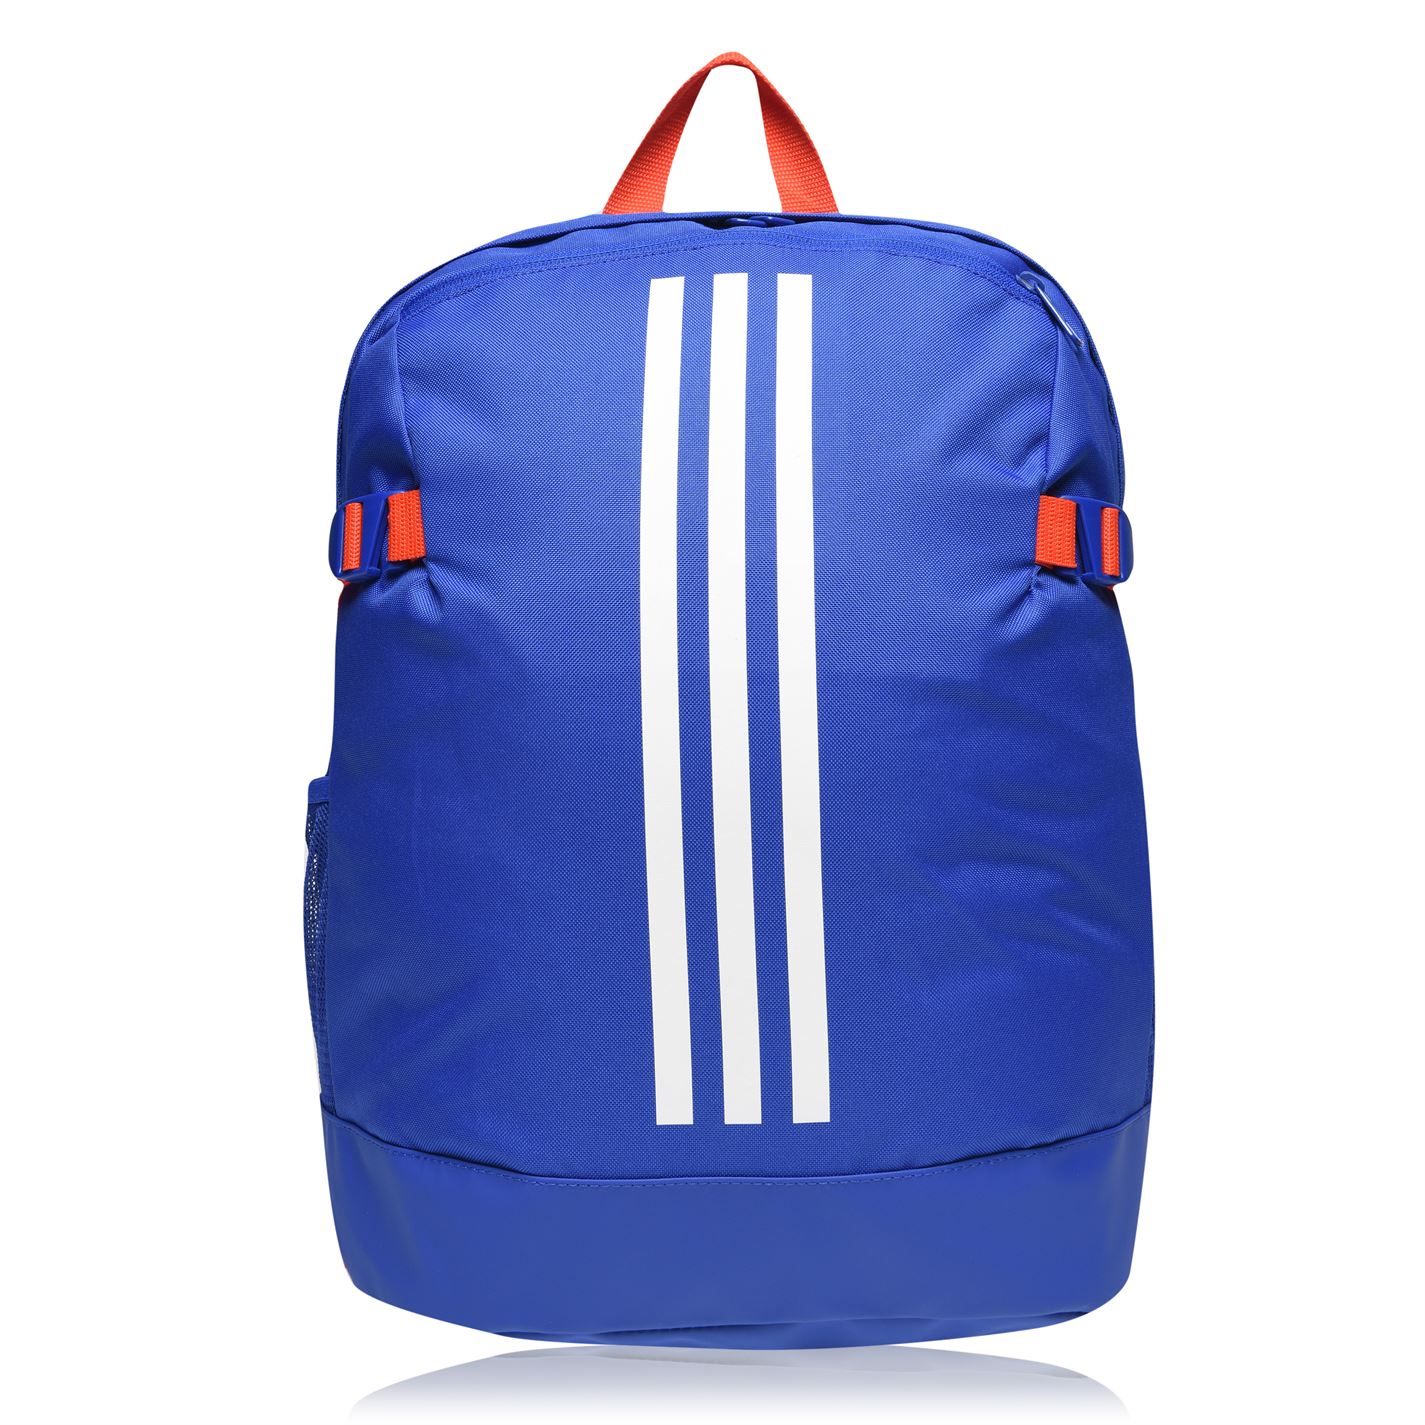 Adidas Power IV Medium Adults Backpack